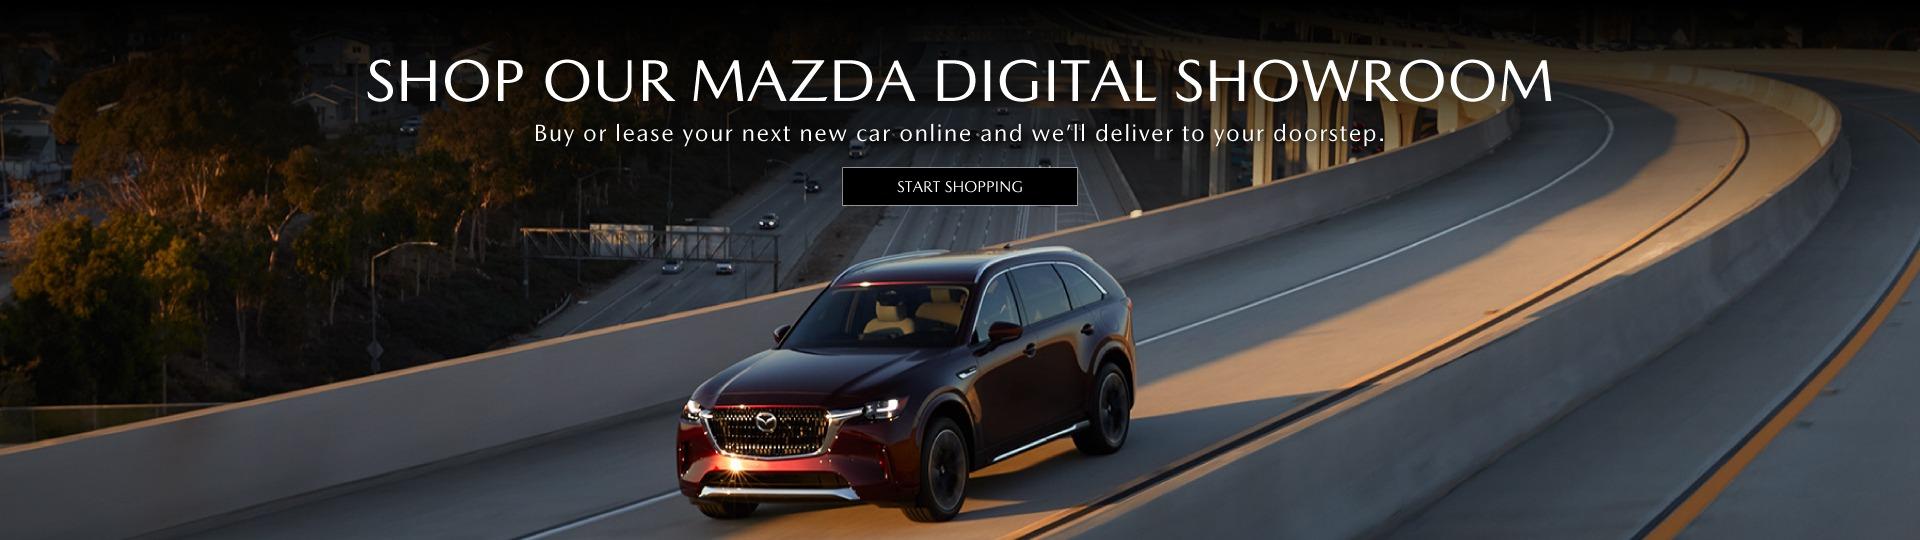 Mazda Digital Showroom